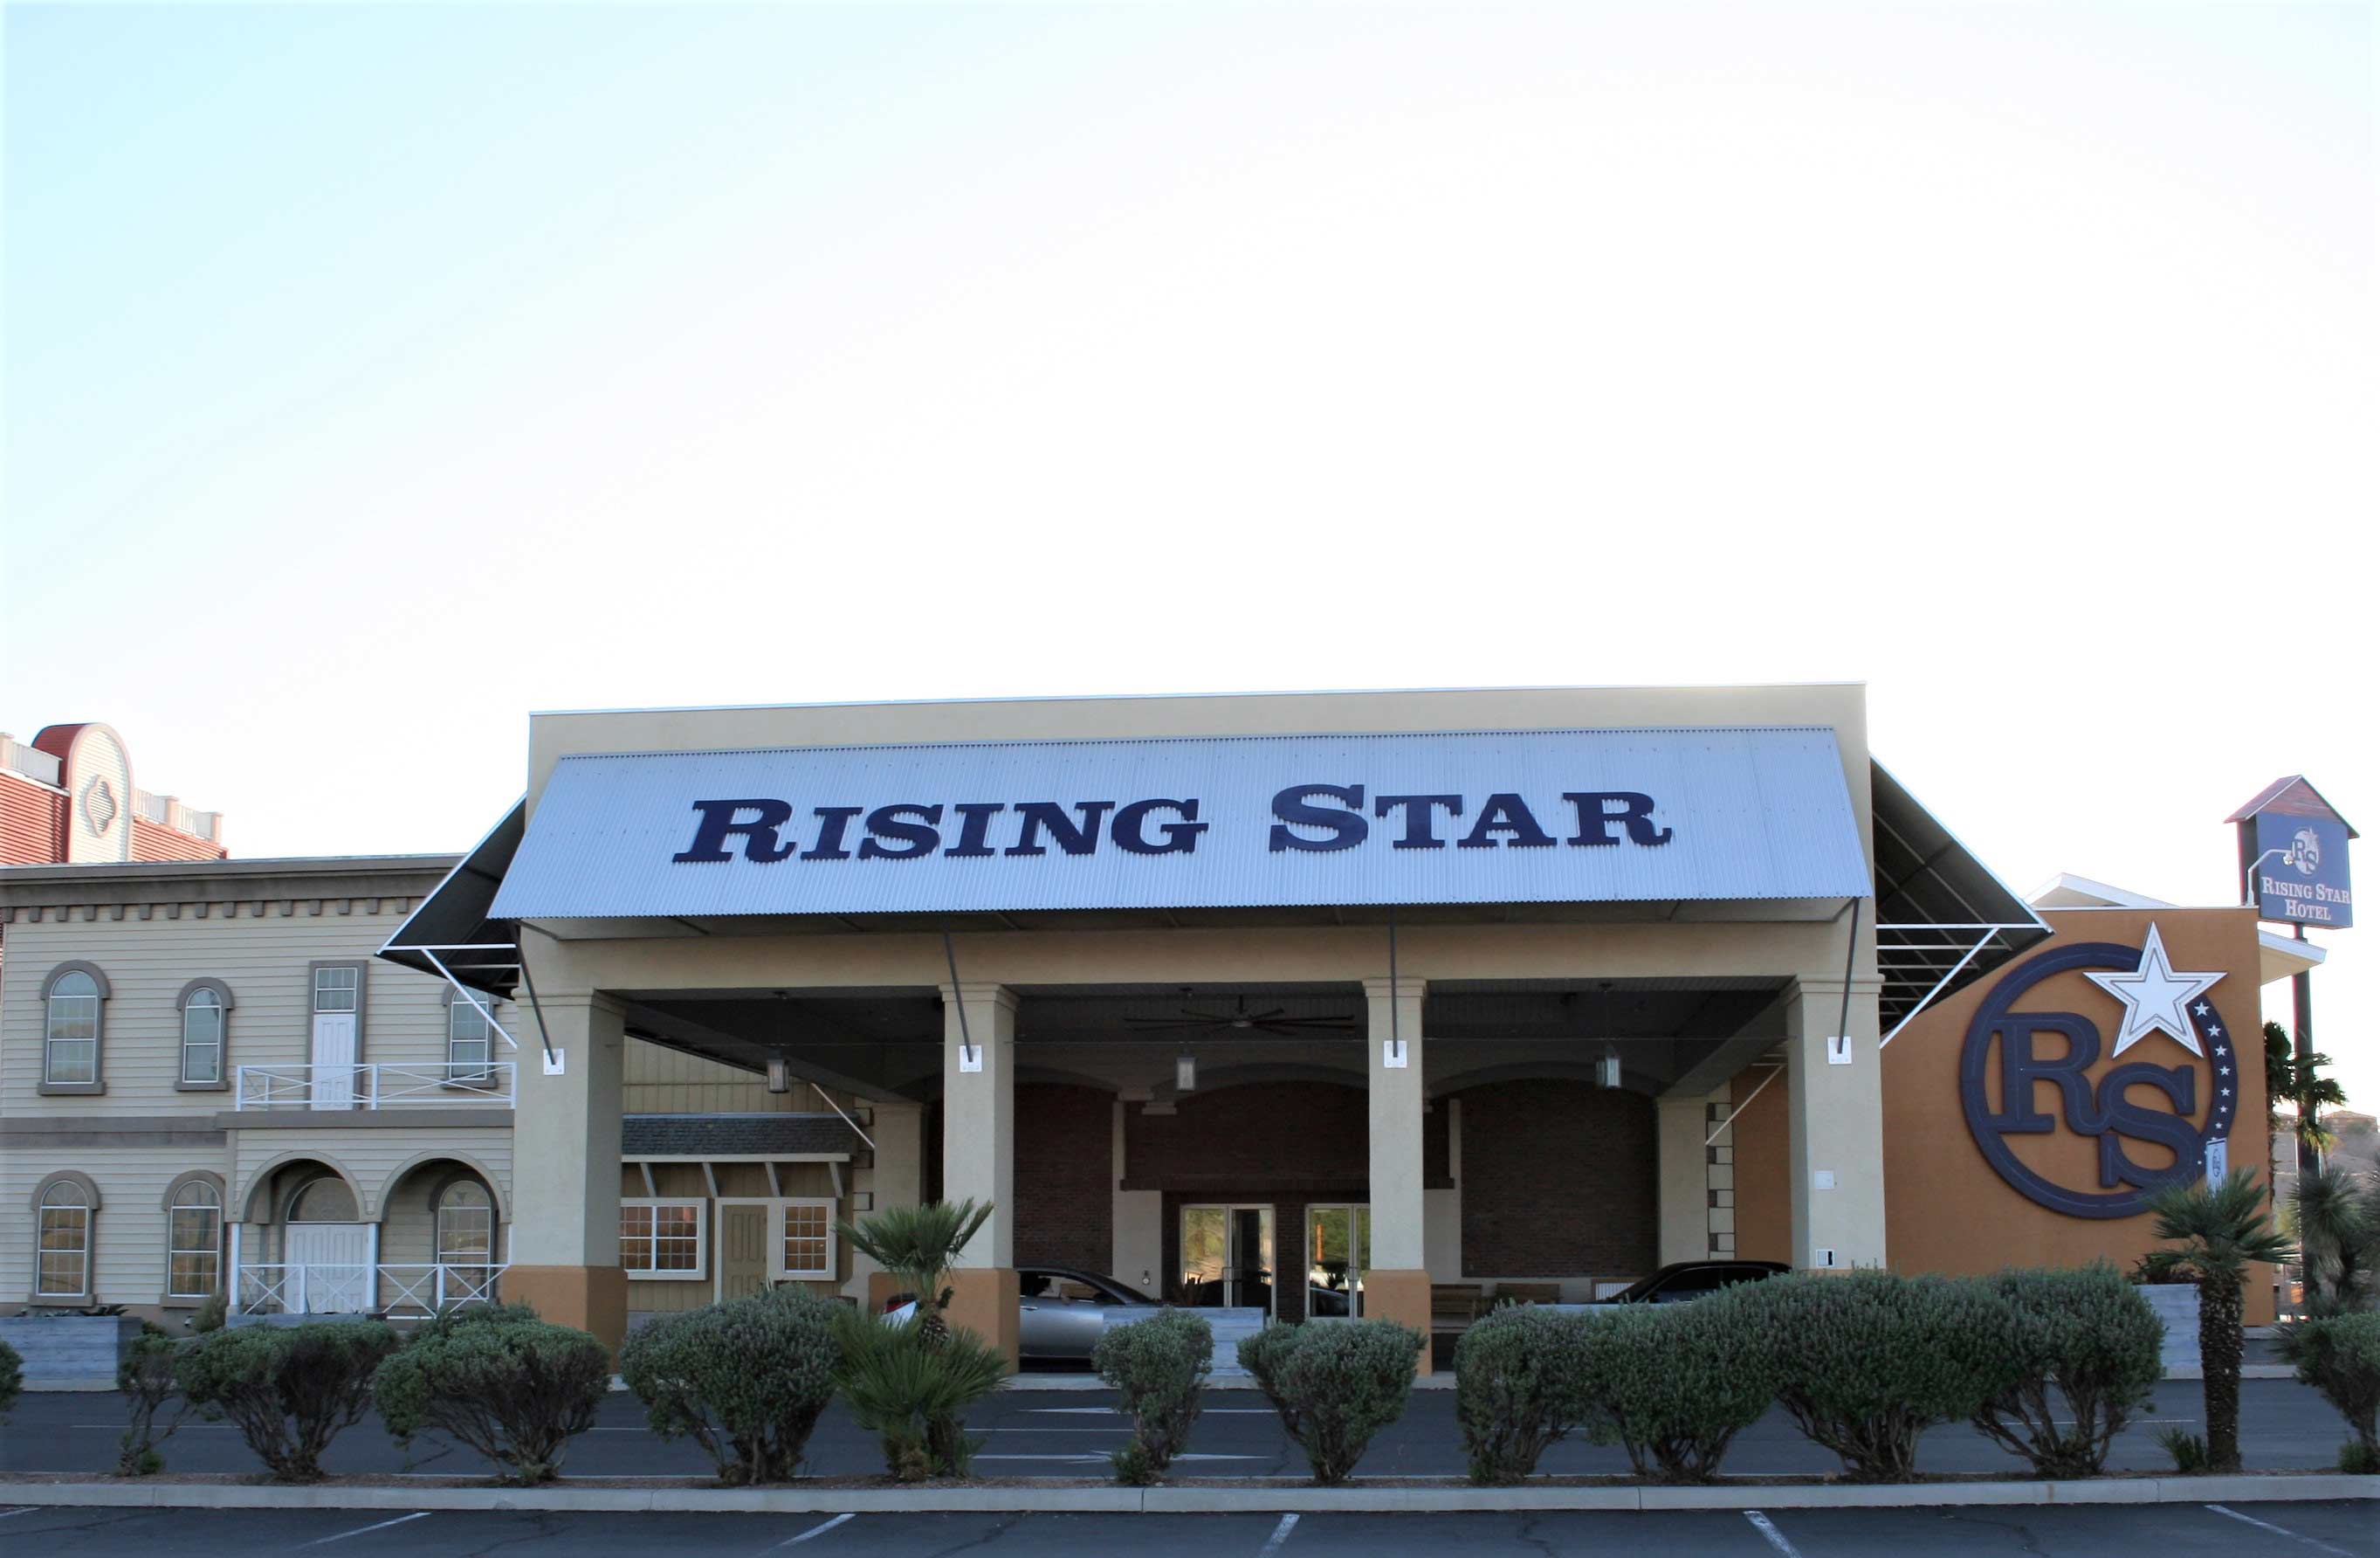 Rising Star Hotel Mesquite Nevada